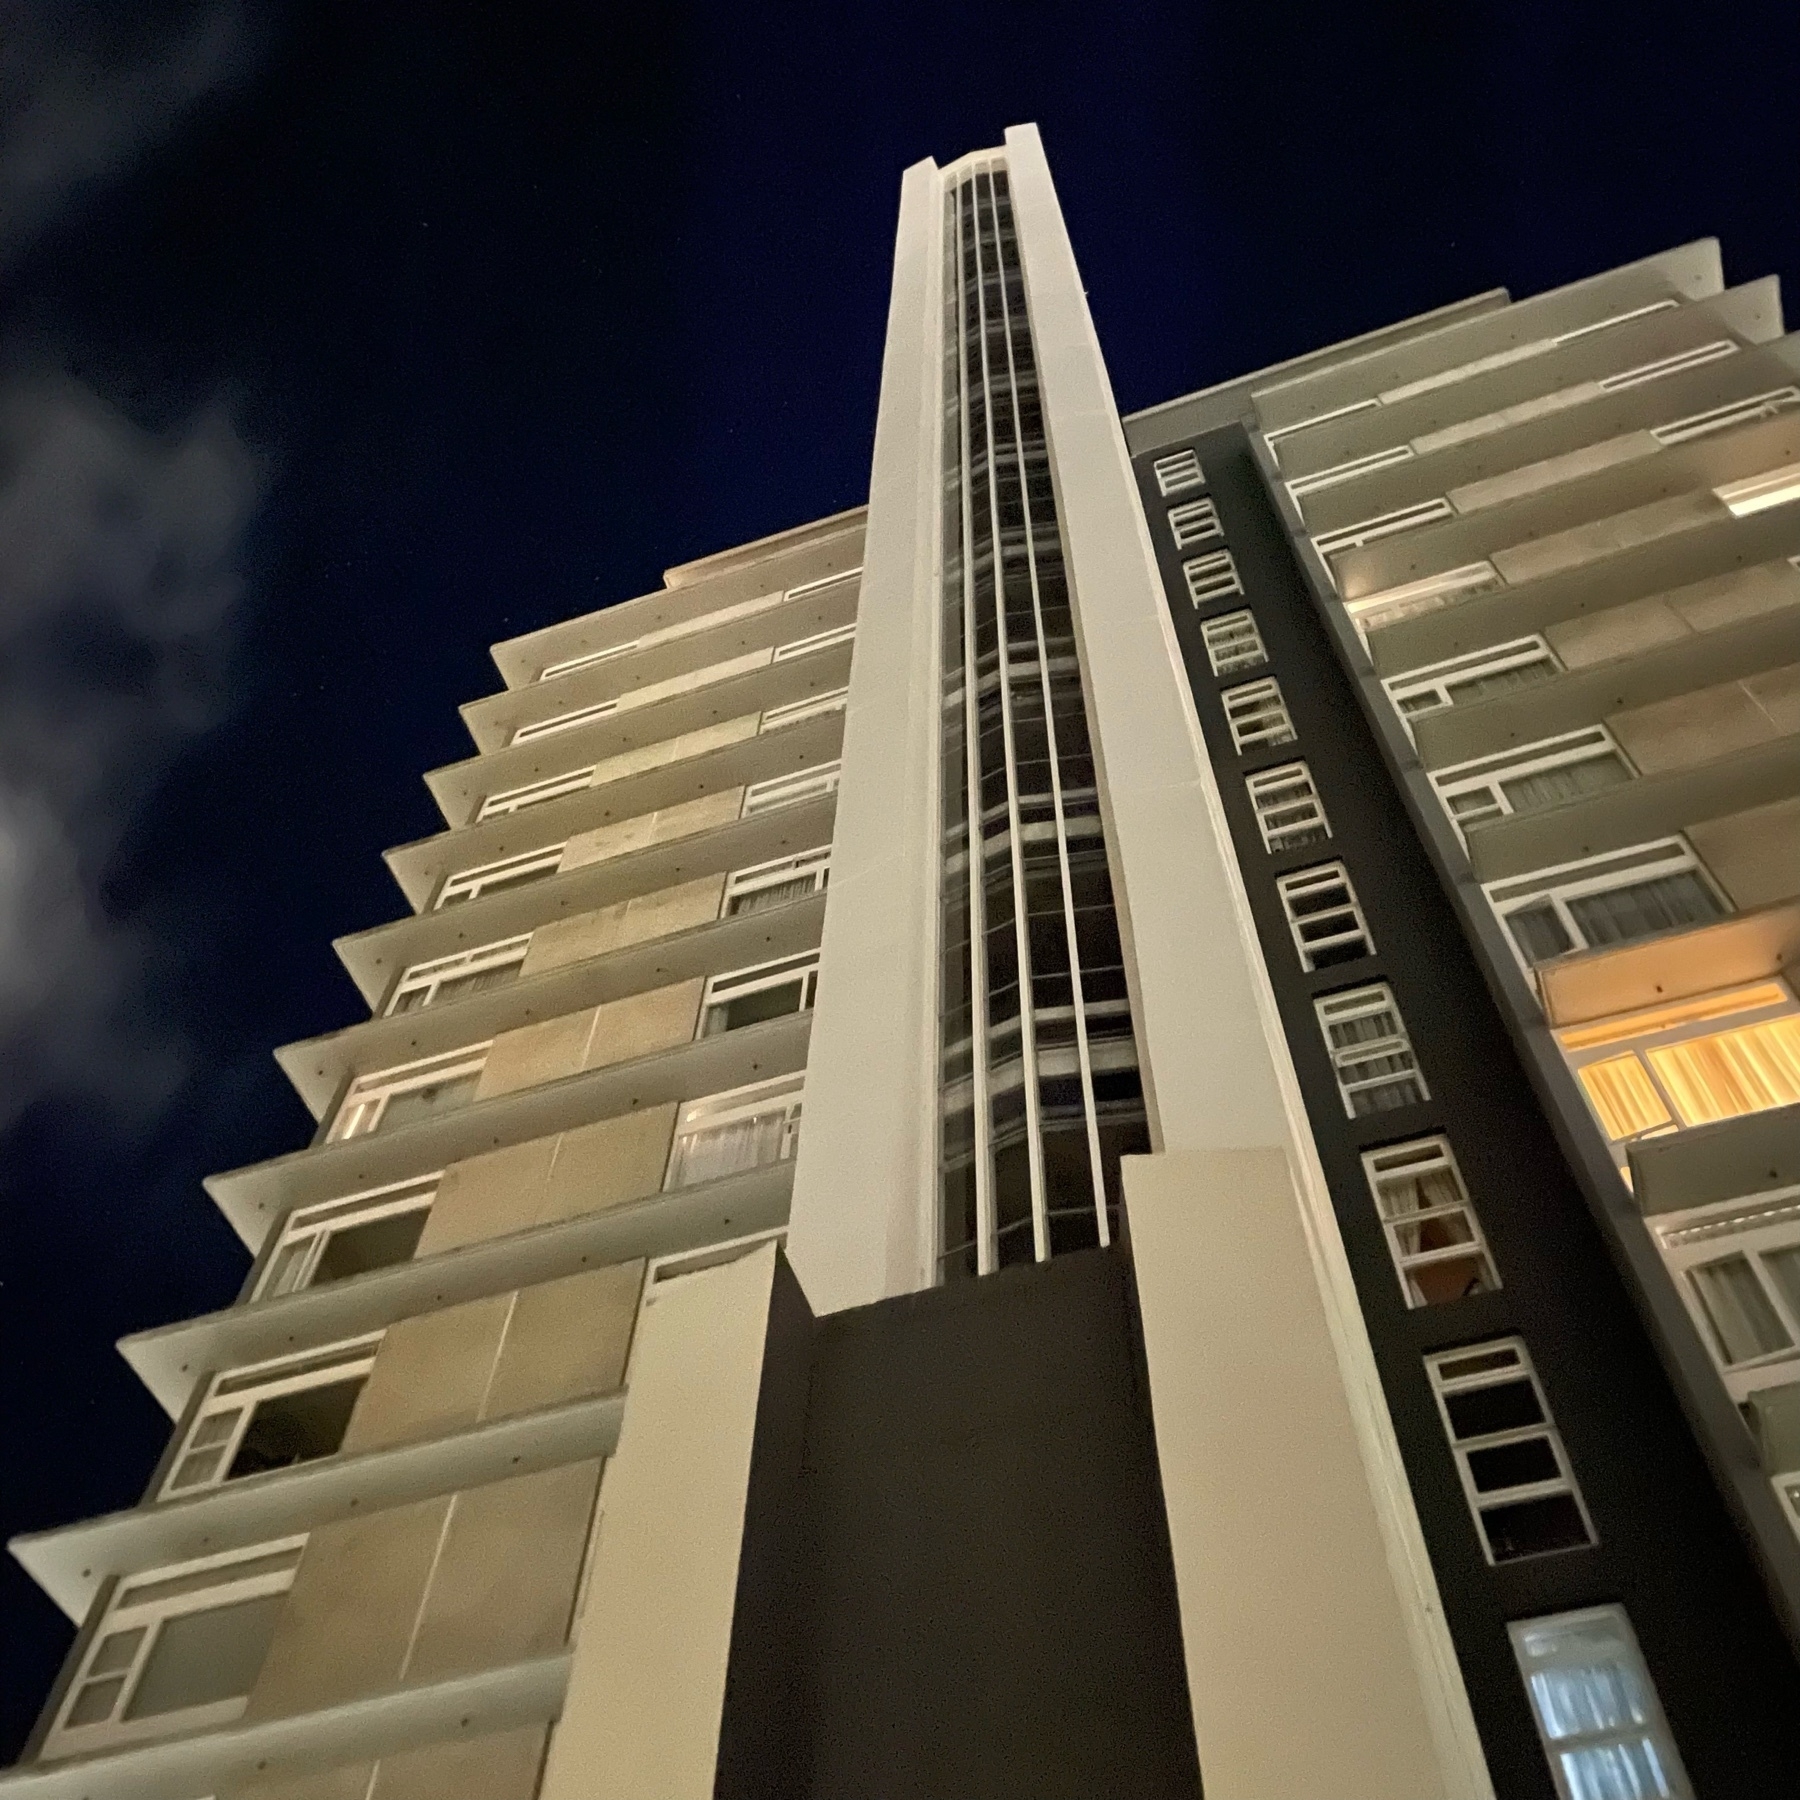 Nighttime view of a modernist tower block. 